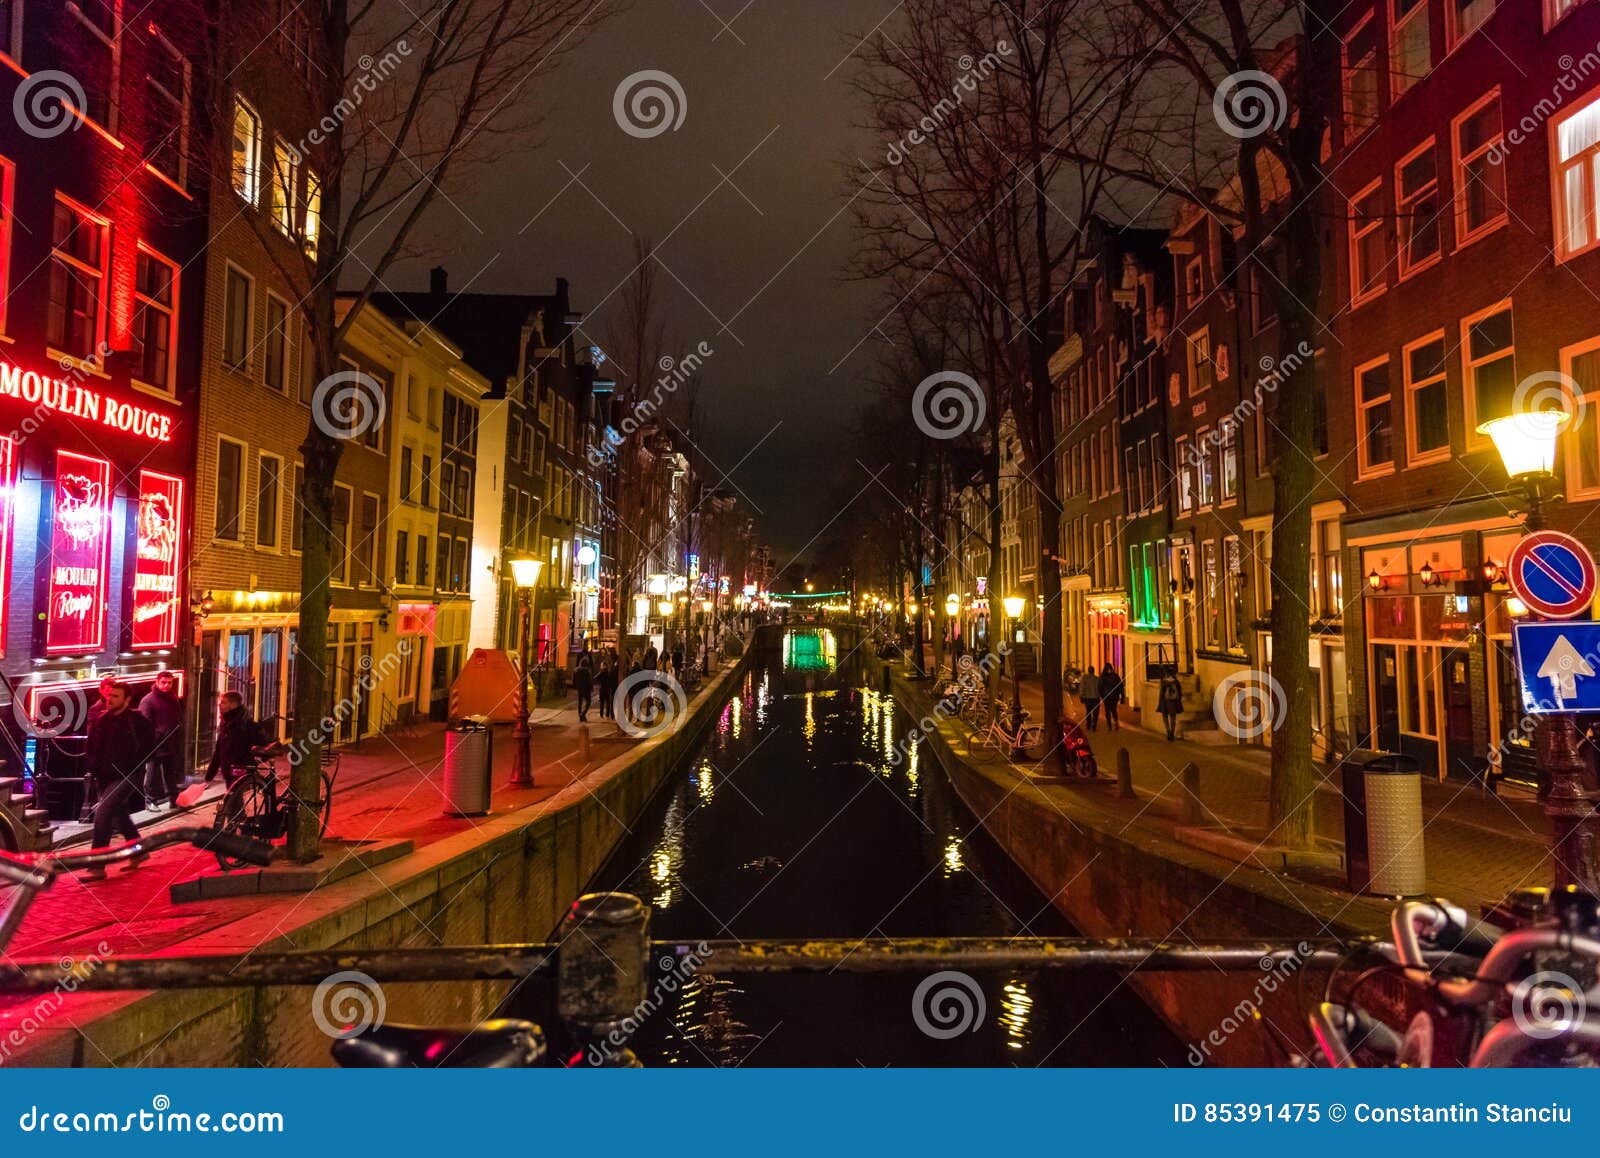 Night Street View Amsterdam Red District Editorial Image - Image bridge, street: 85391475